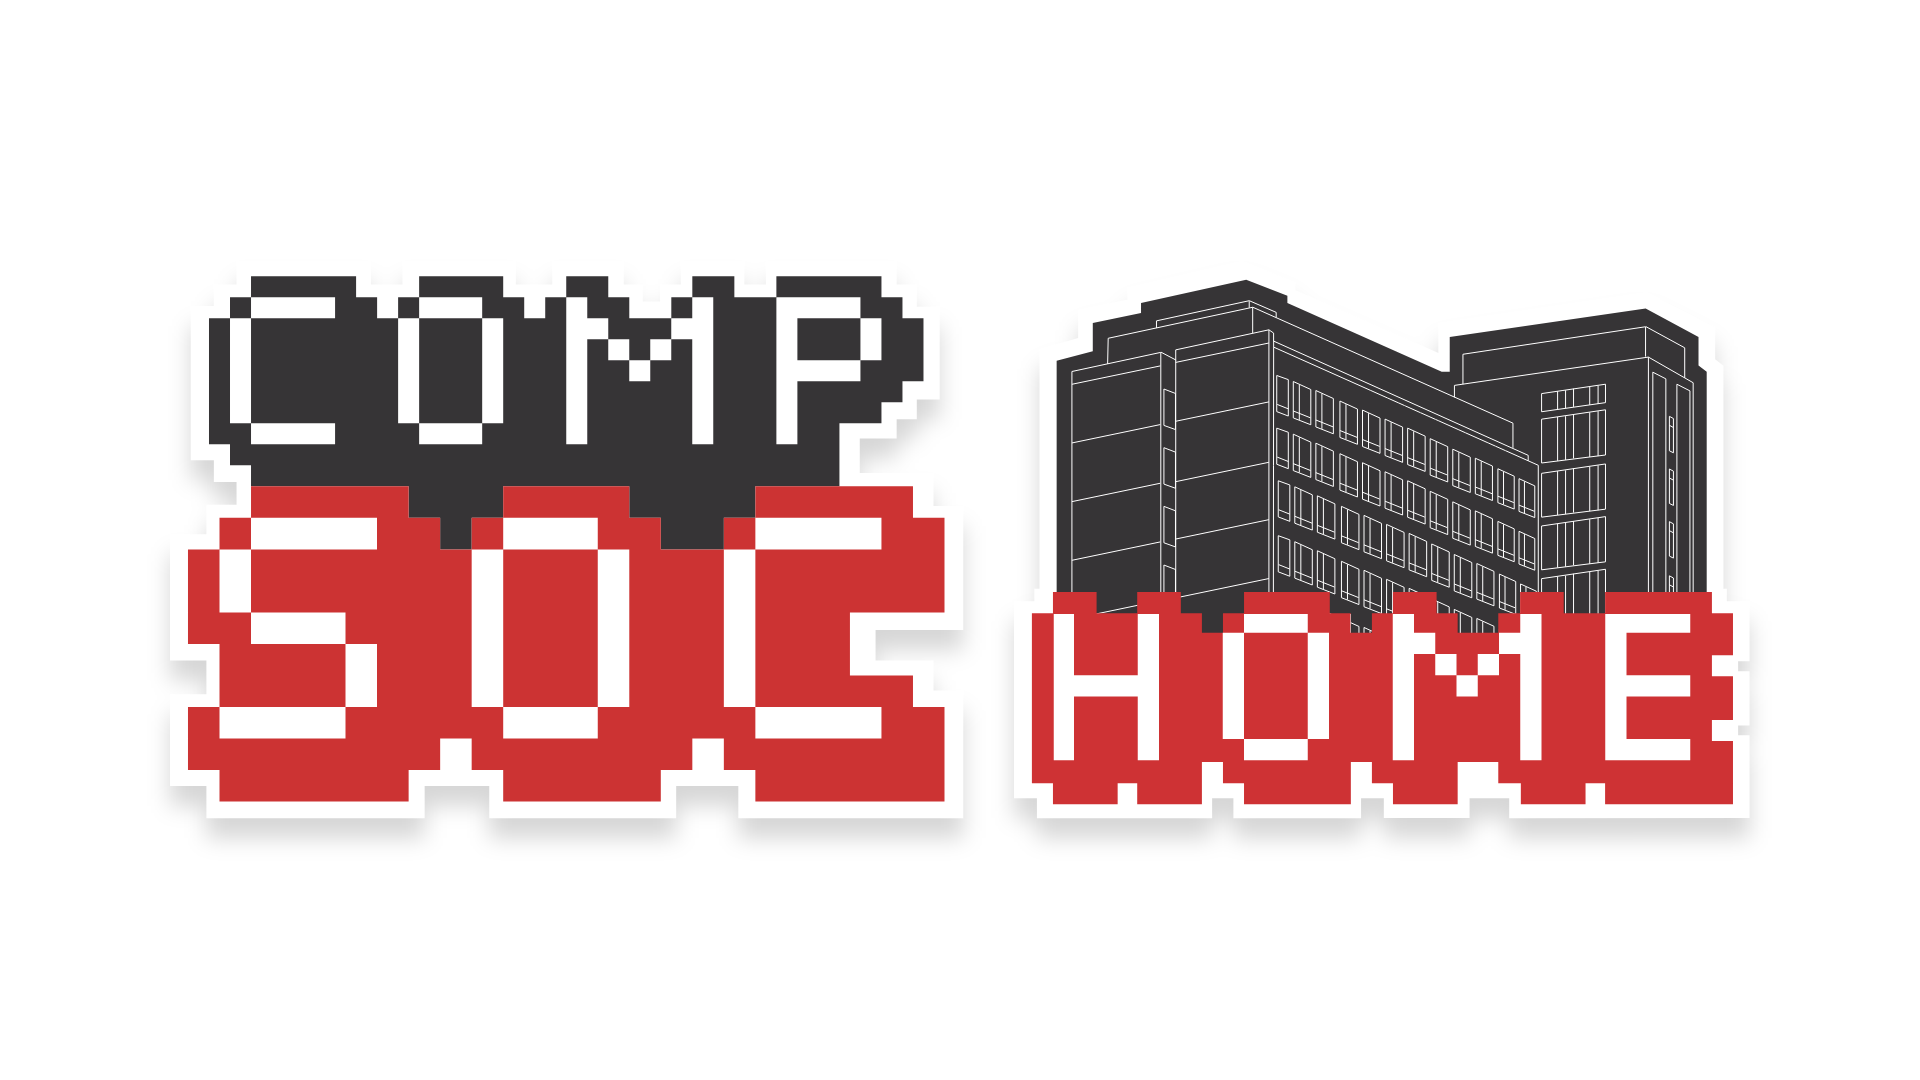 CompSoc stickers